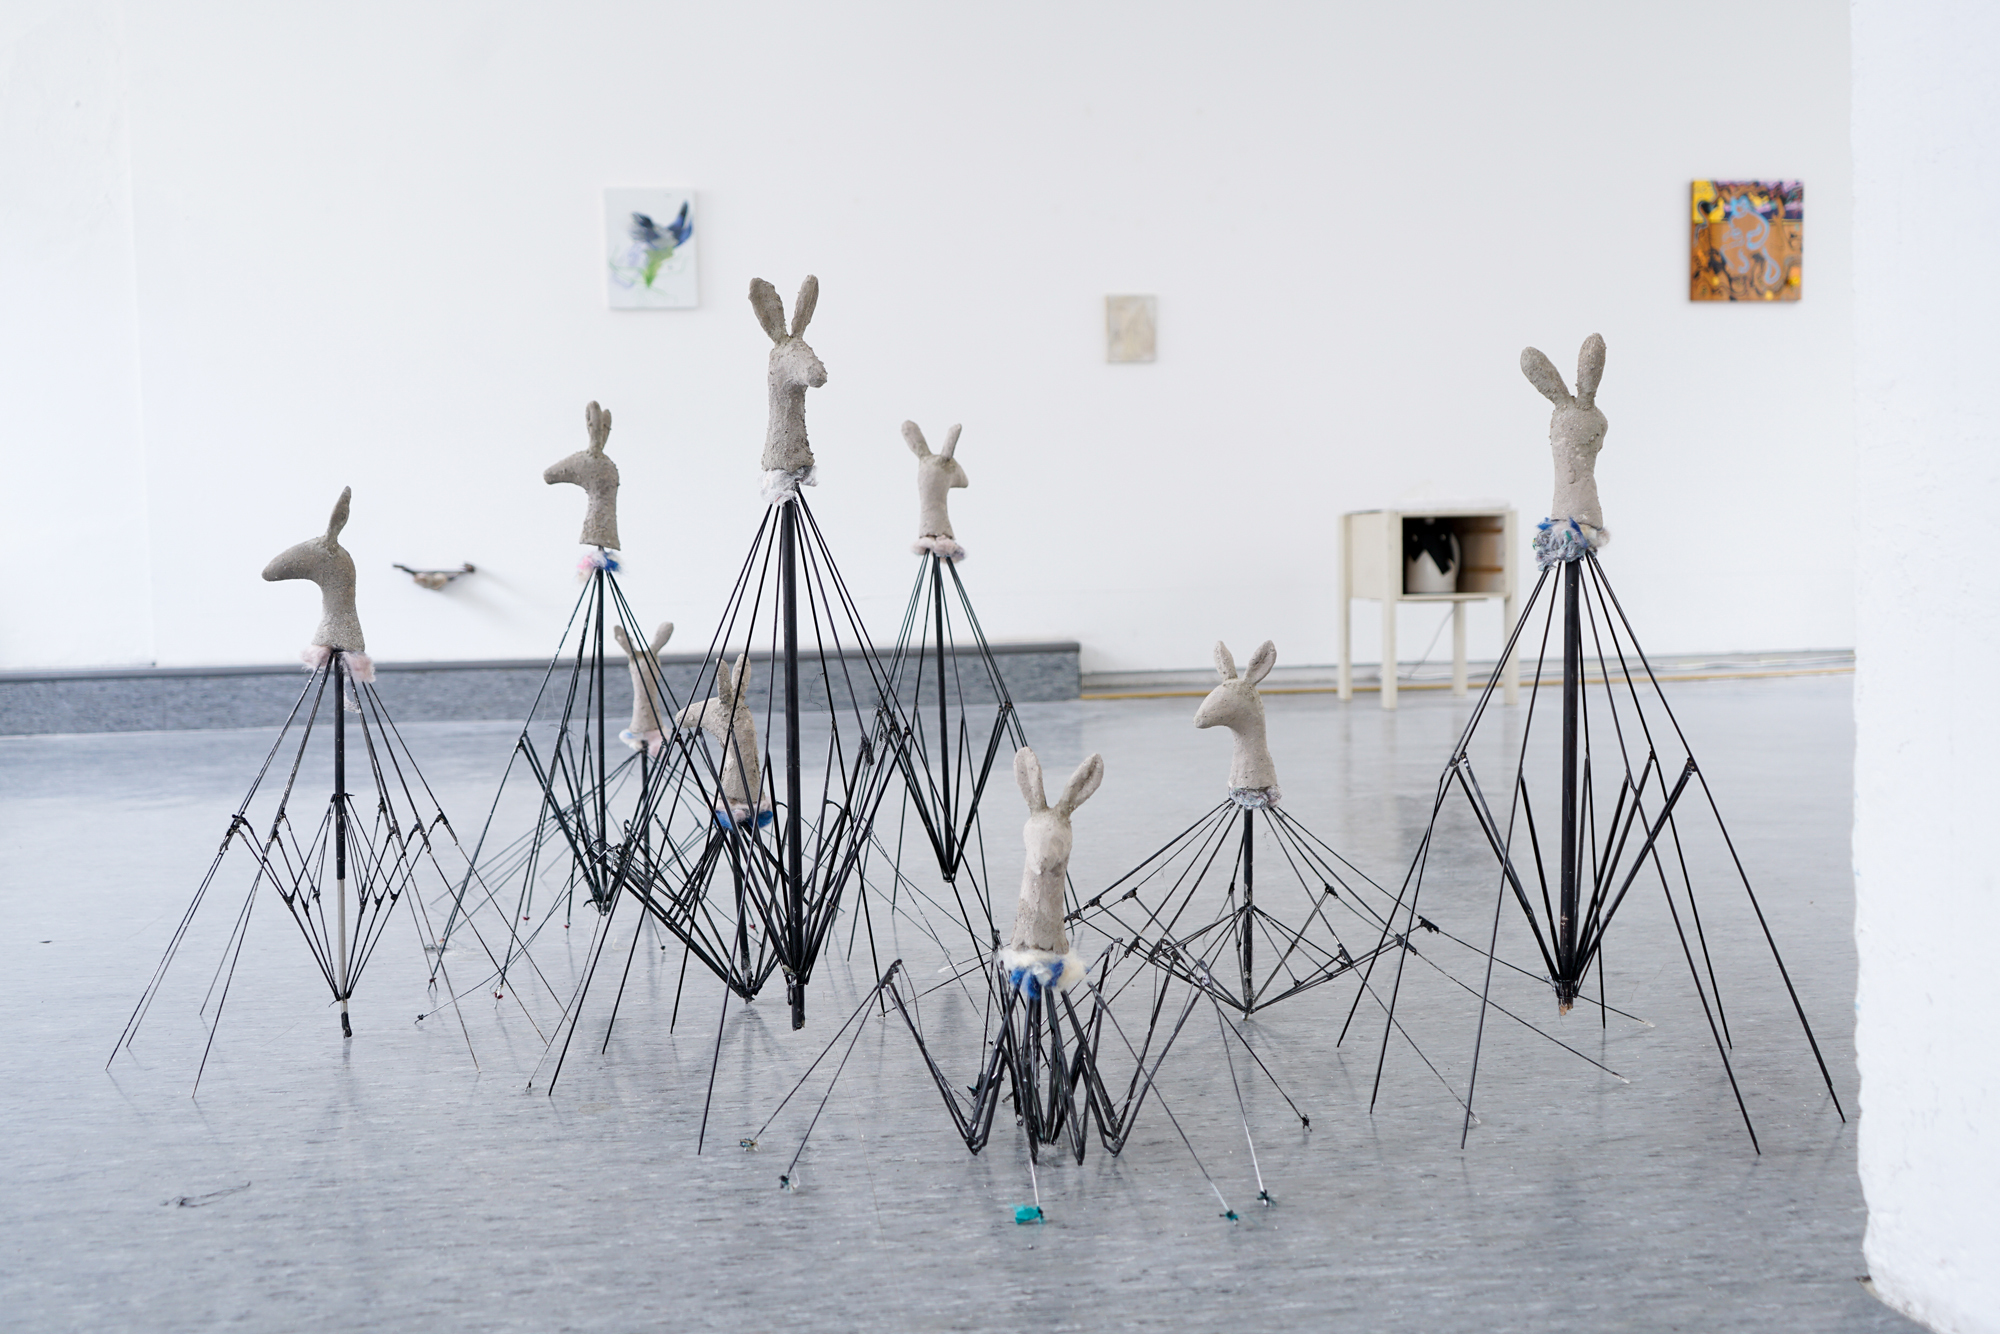 Pawel Marcinek, Common Horizon, 2022, mixed media installation: umbrella wires, plaster, ashes, dust